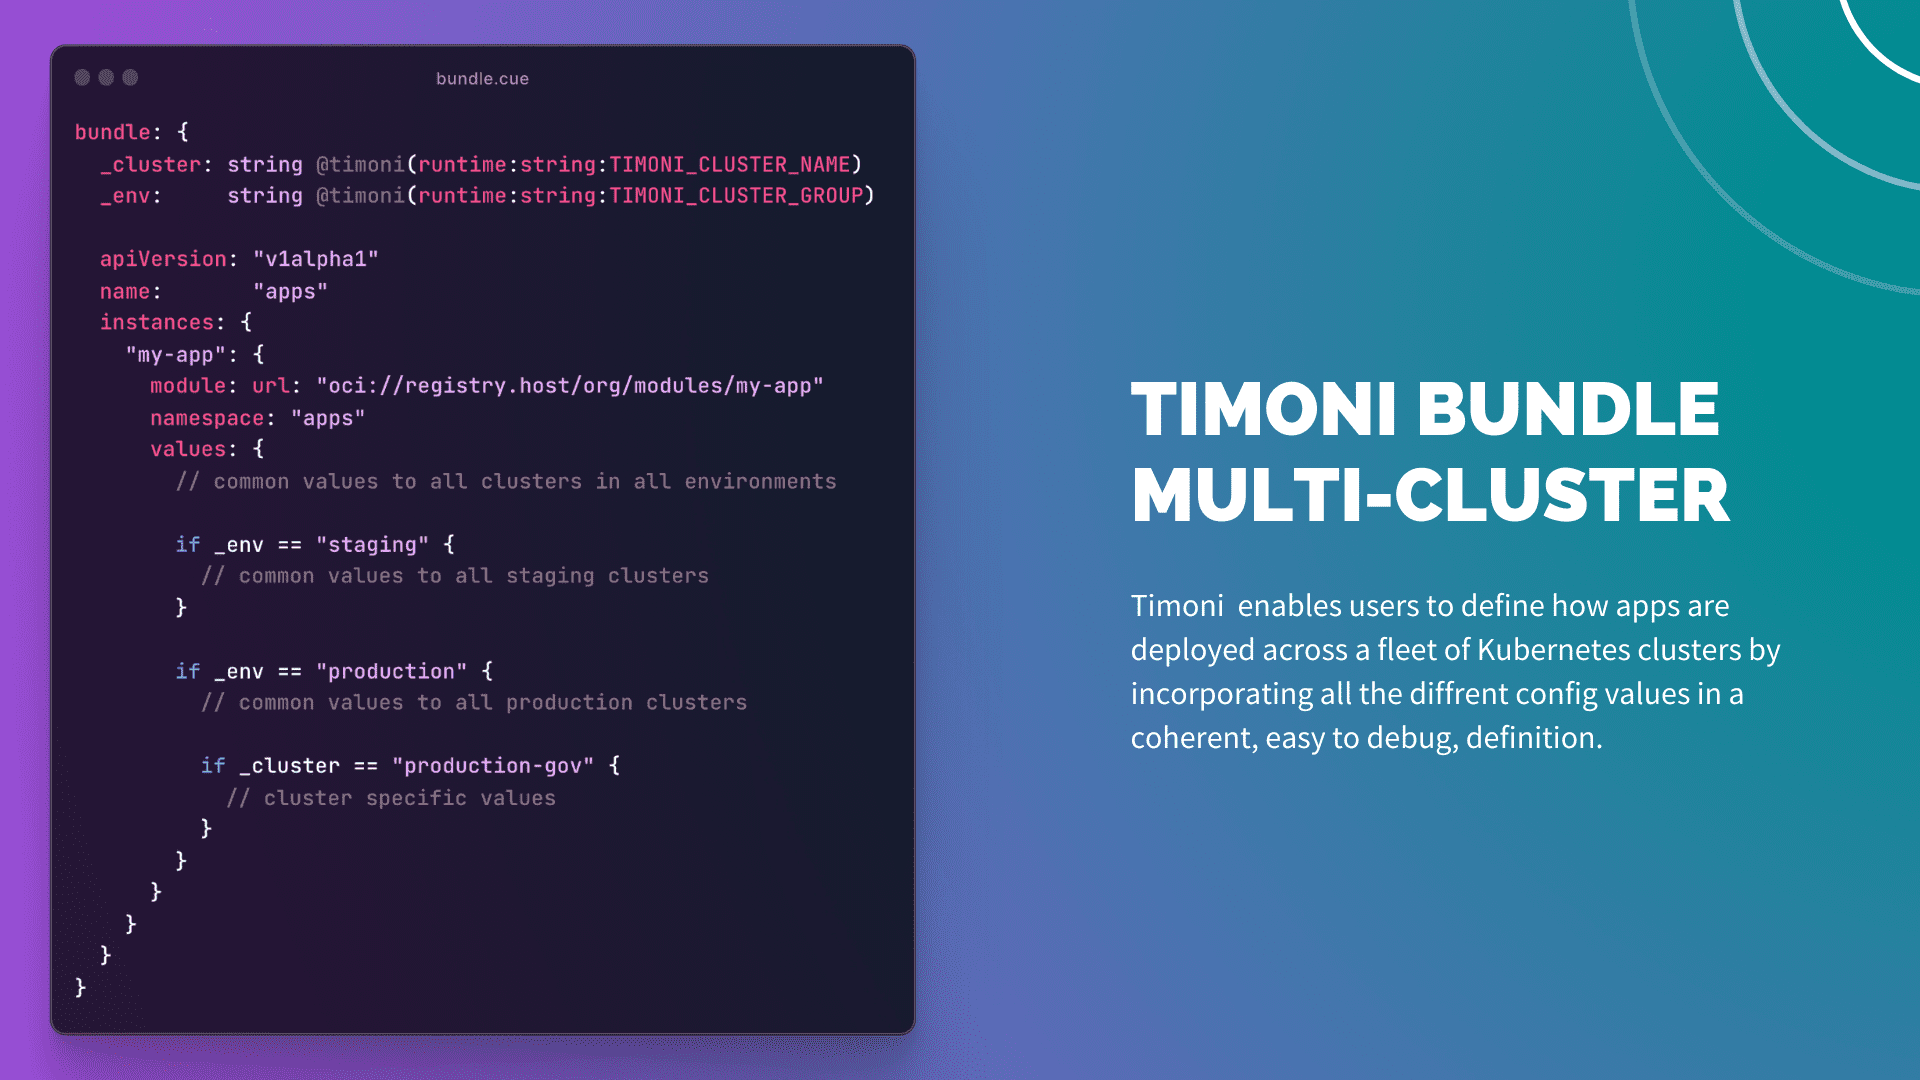 Timoni bundle multi-cluster